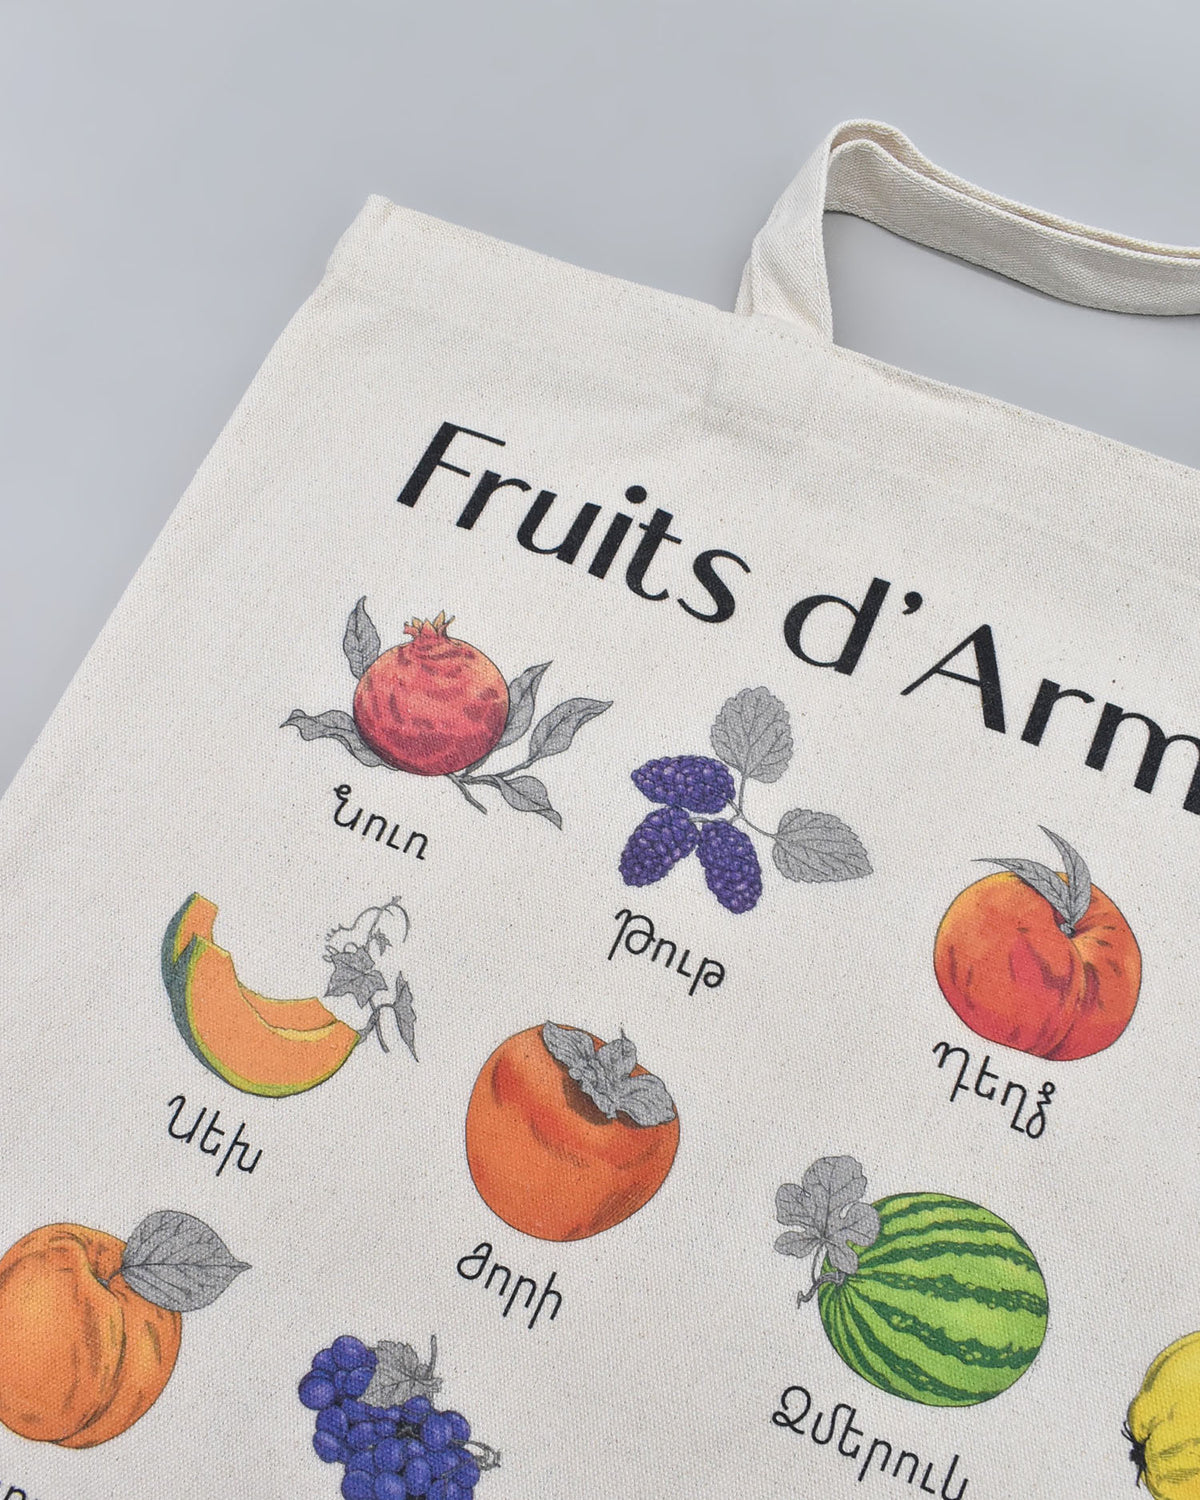 🚨ONLY ONE🚨 Fruits D'Armenie Ararat Market Tote Bag